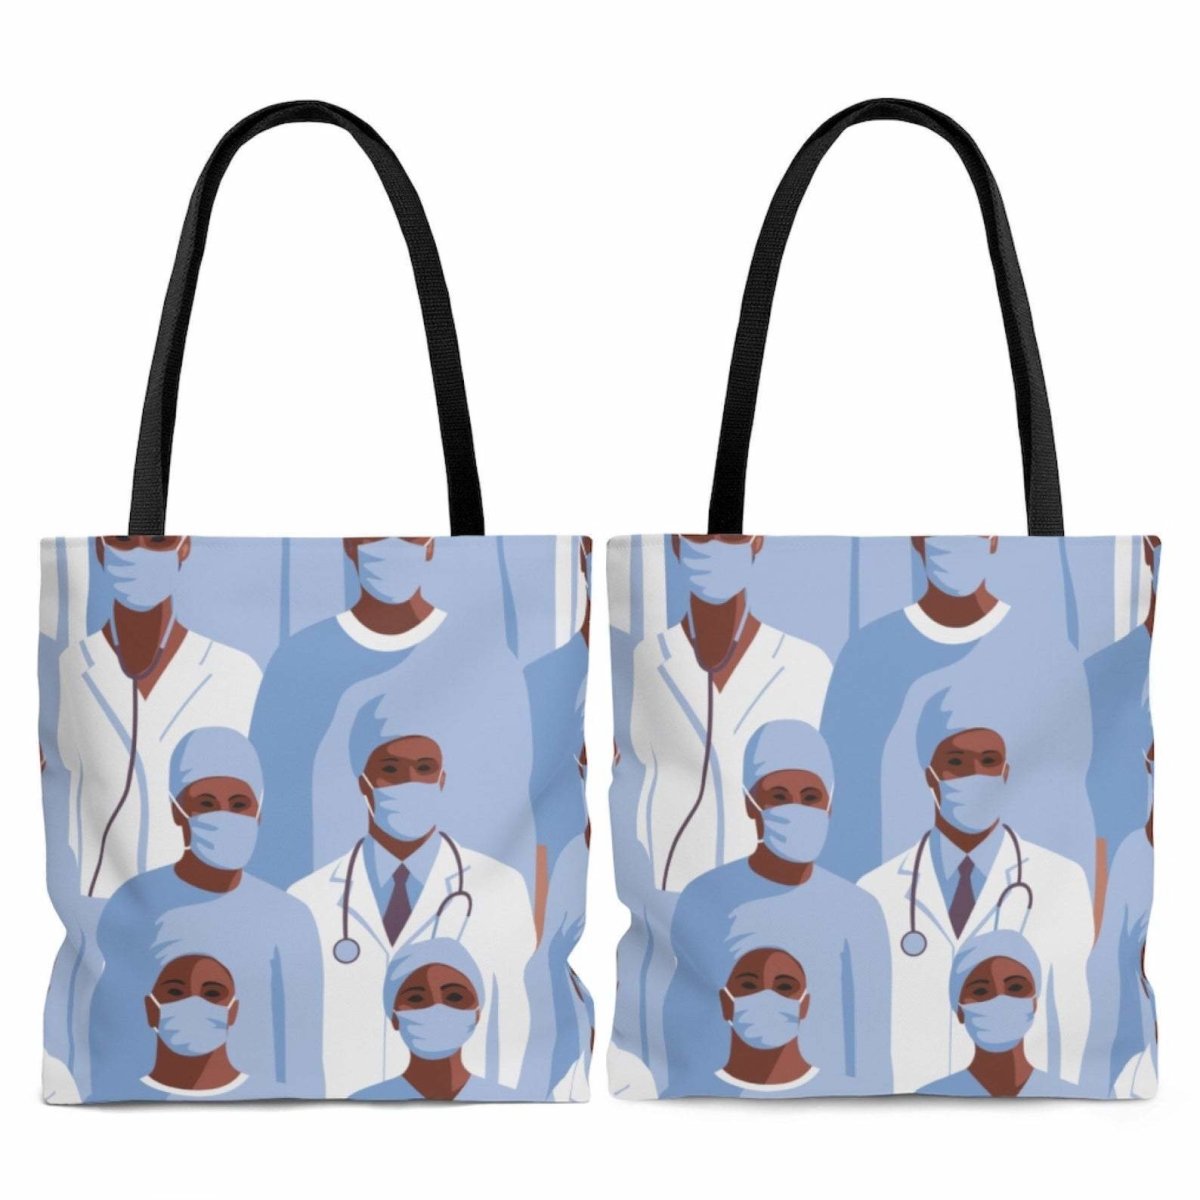 Black Doctors Tote Bag - The Trini Gee